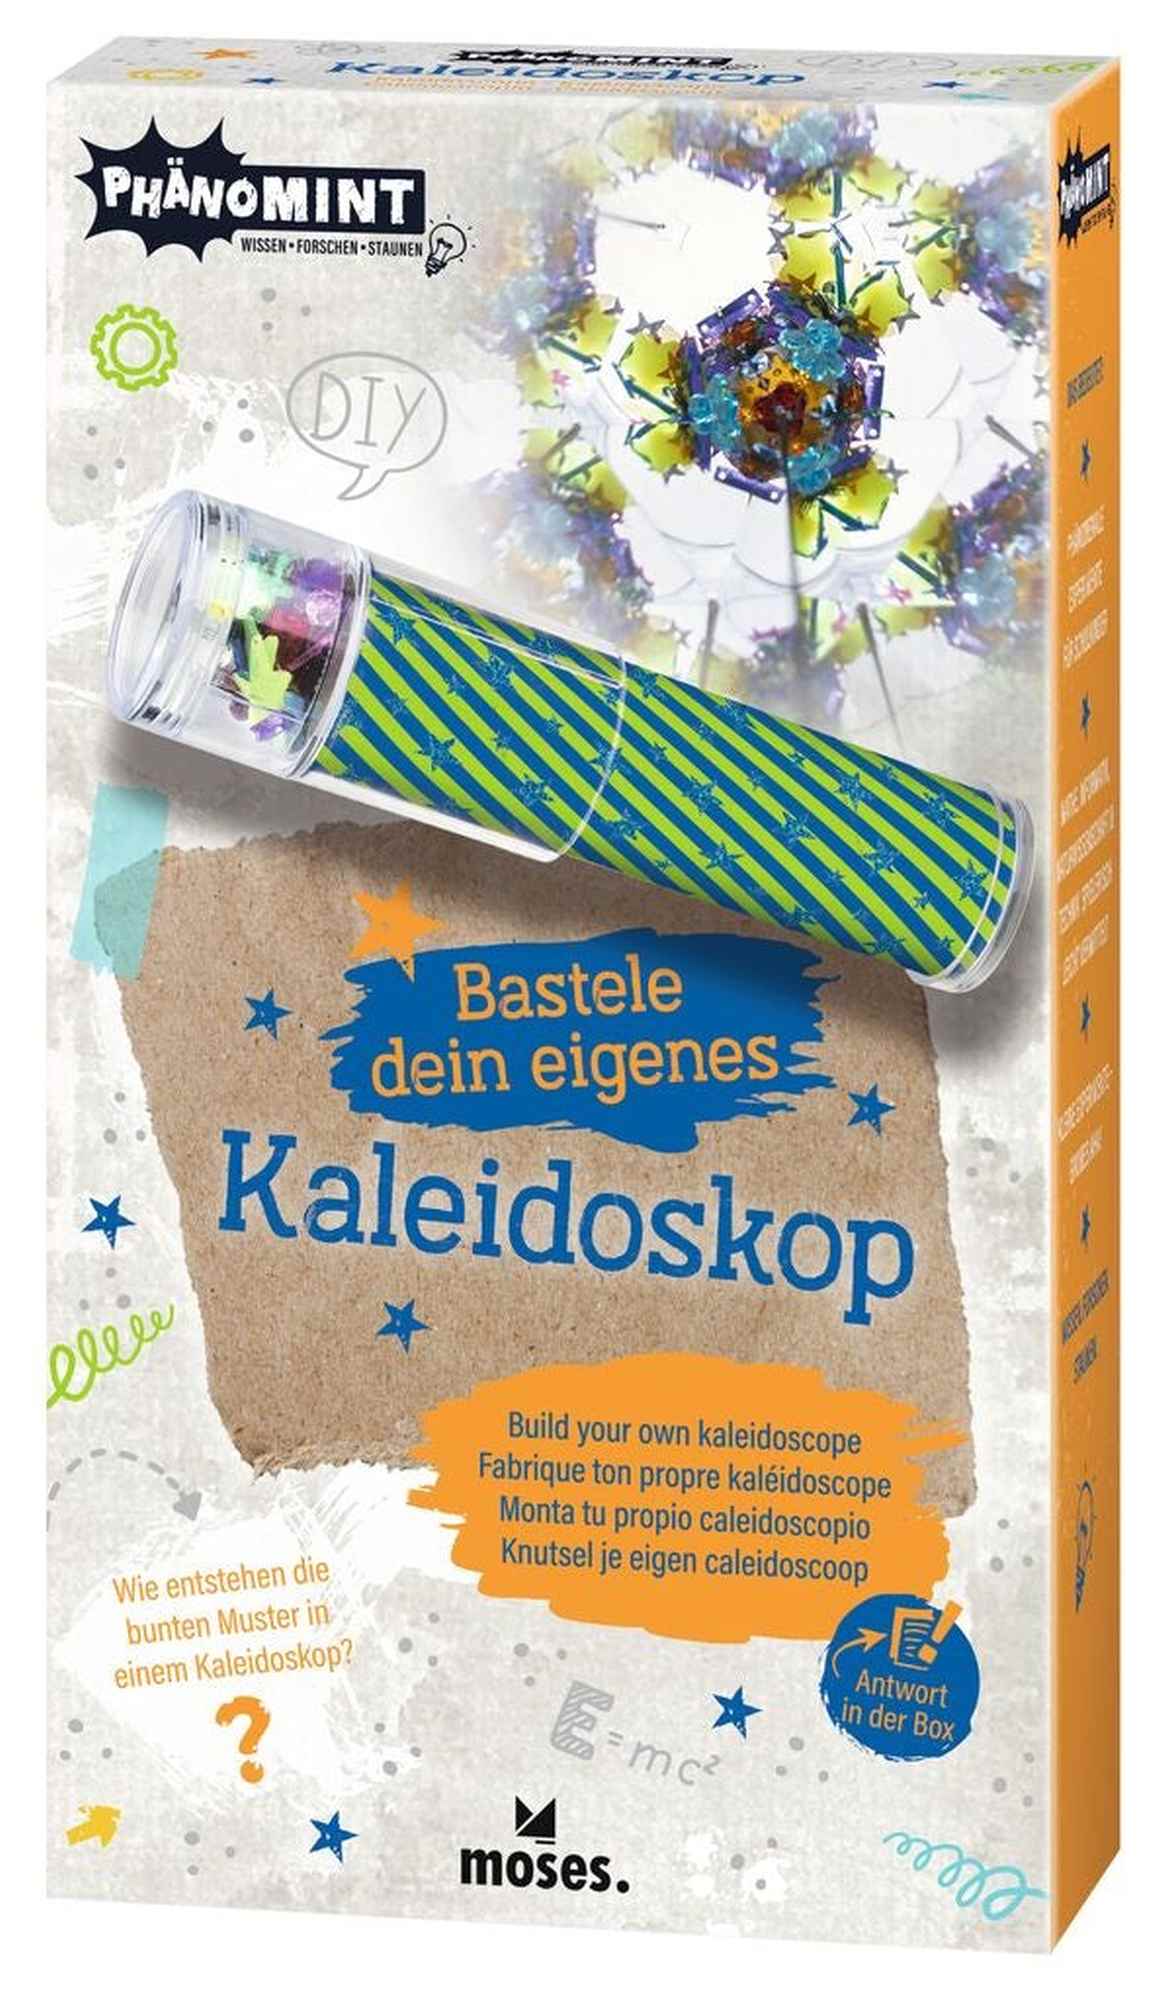 Kaleidoskop-Bausatz "Phänomenal"